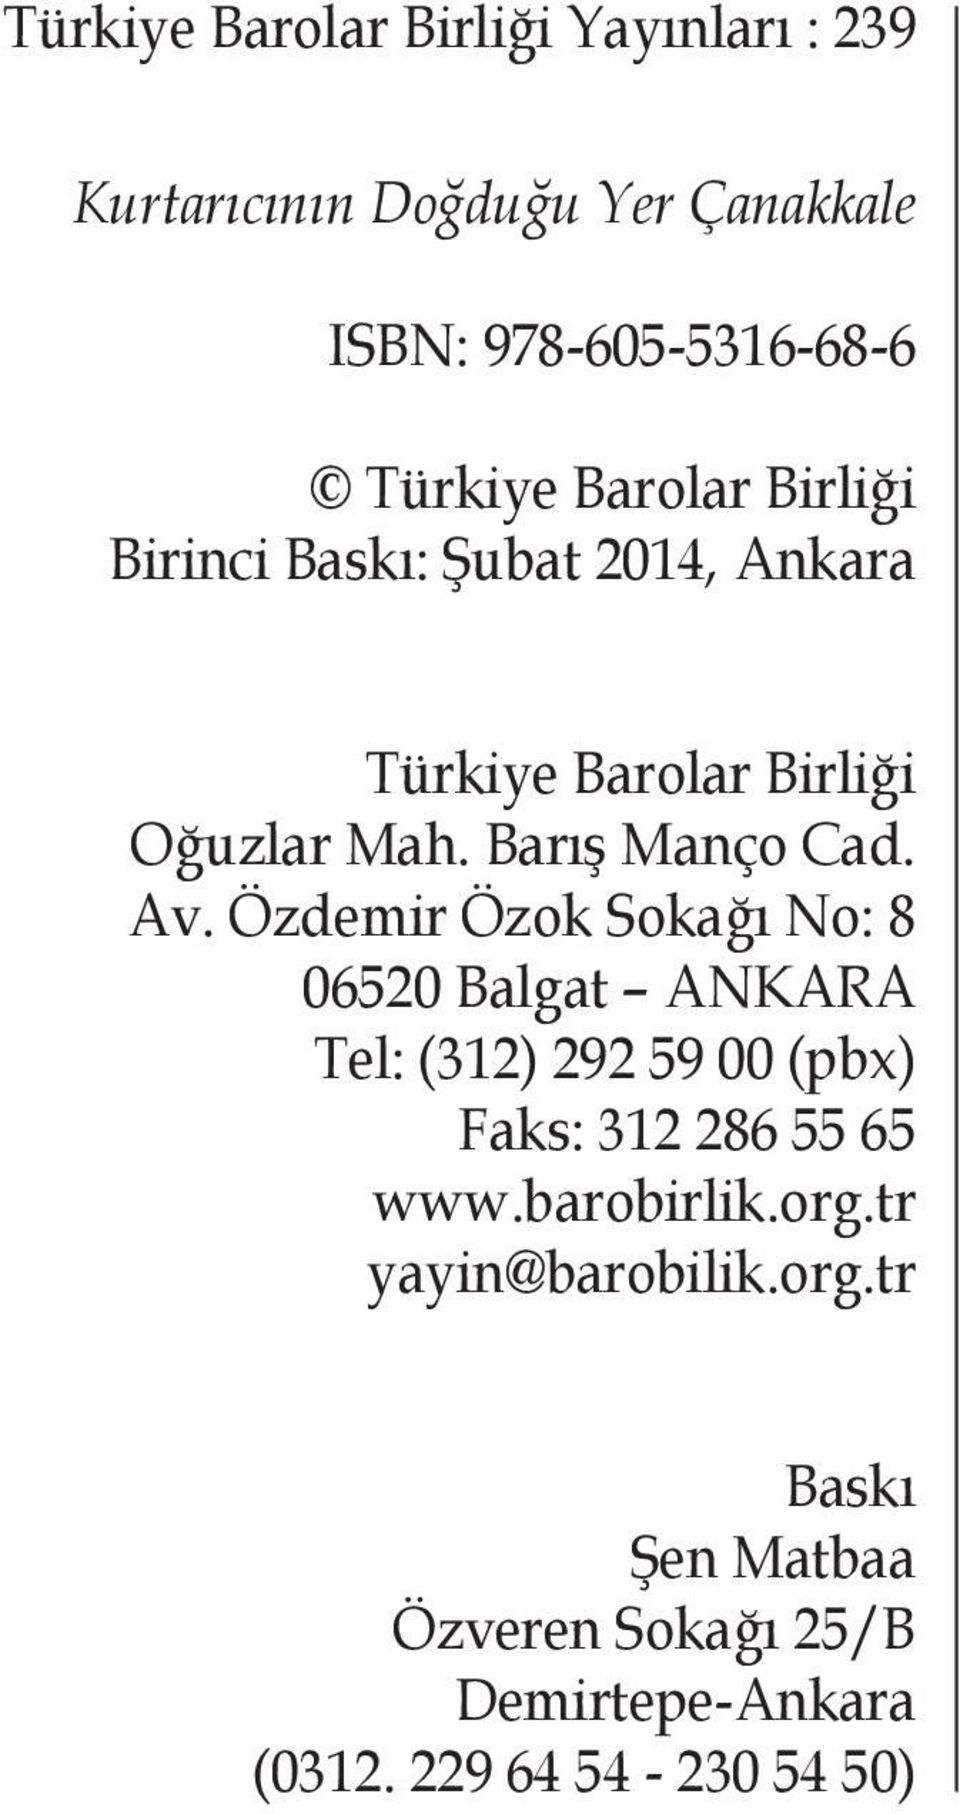 Özdemir Özok Sokağı No: 8 06520 Balgat ANKARA Tel: (312) 292 59 00 (pbx) Faks: 312 286 55 65 www.barobirlik.